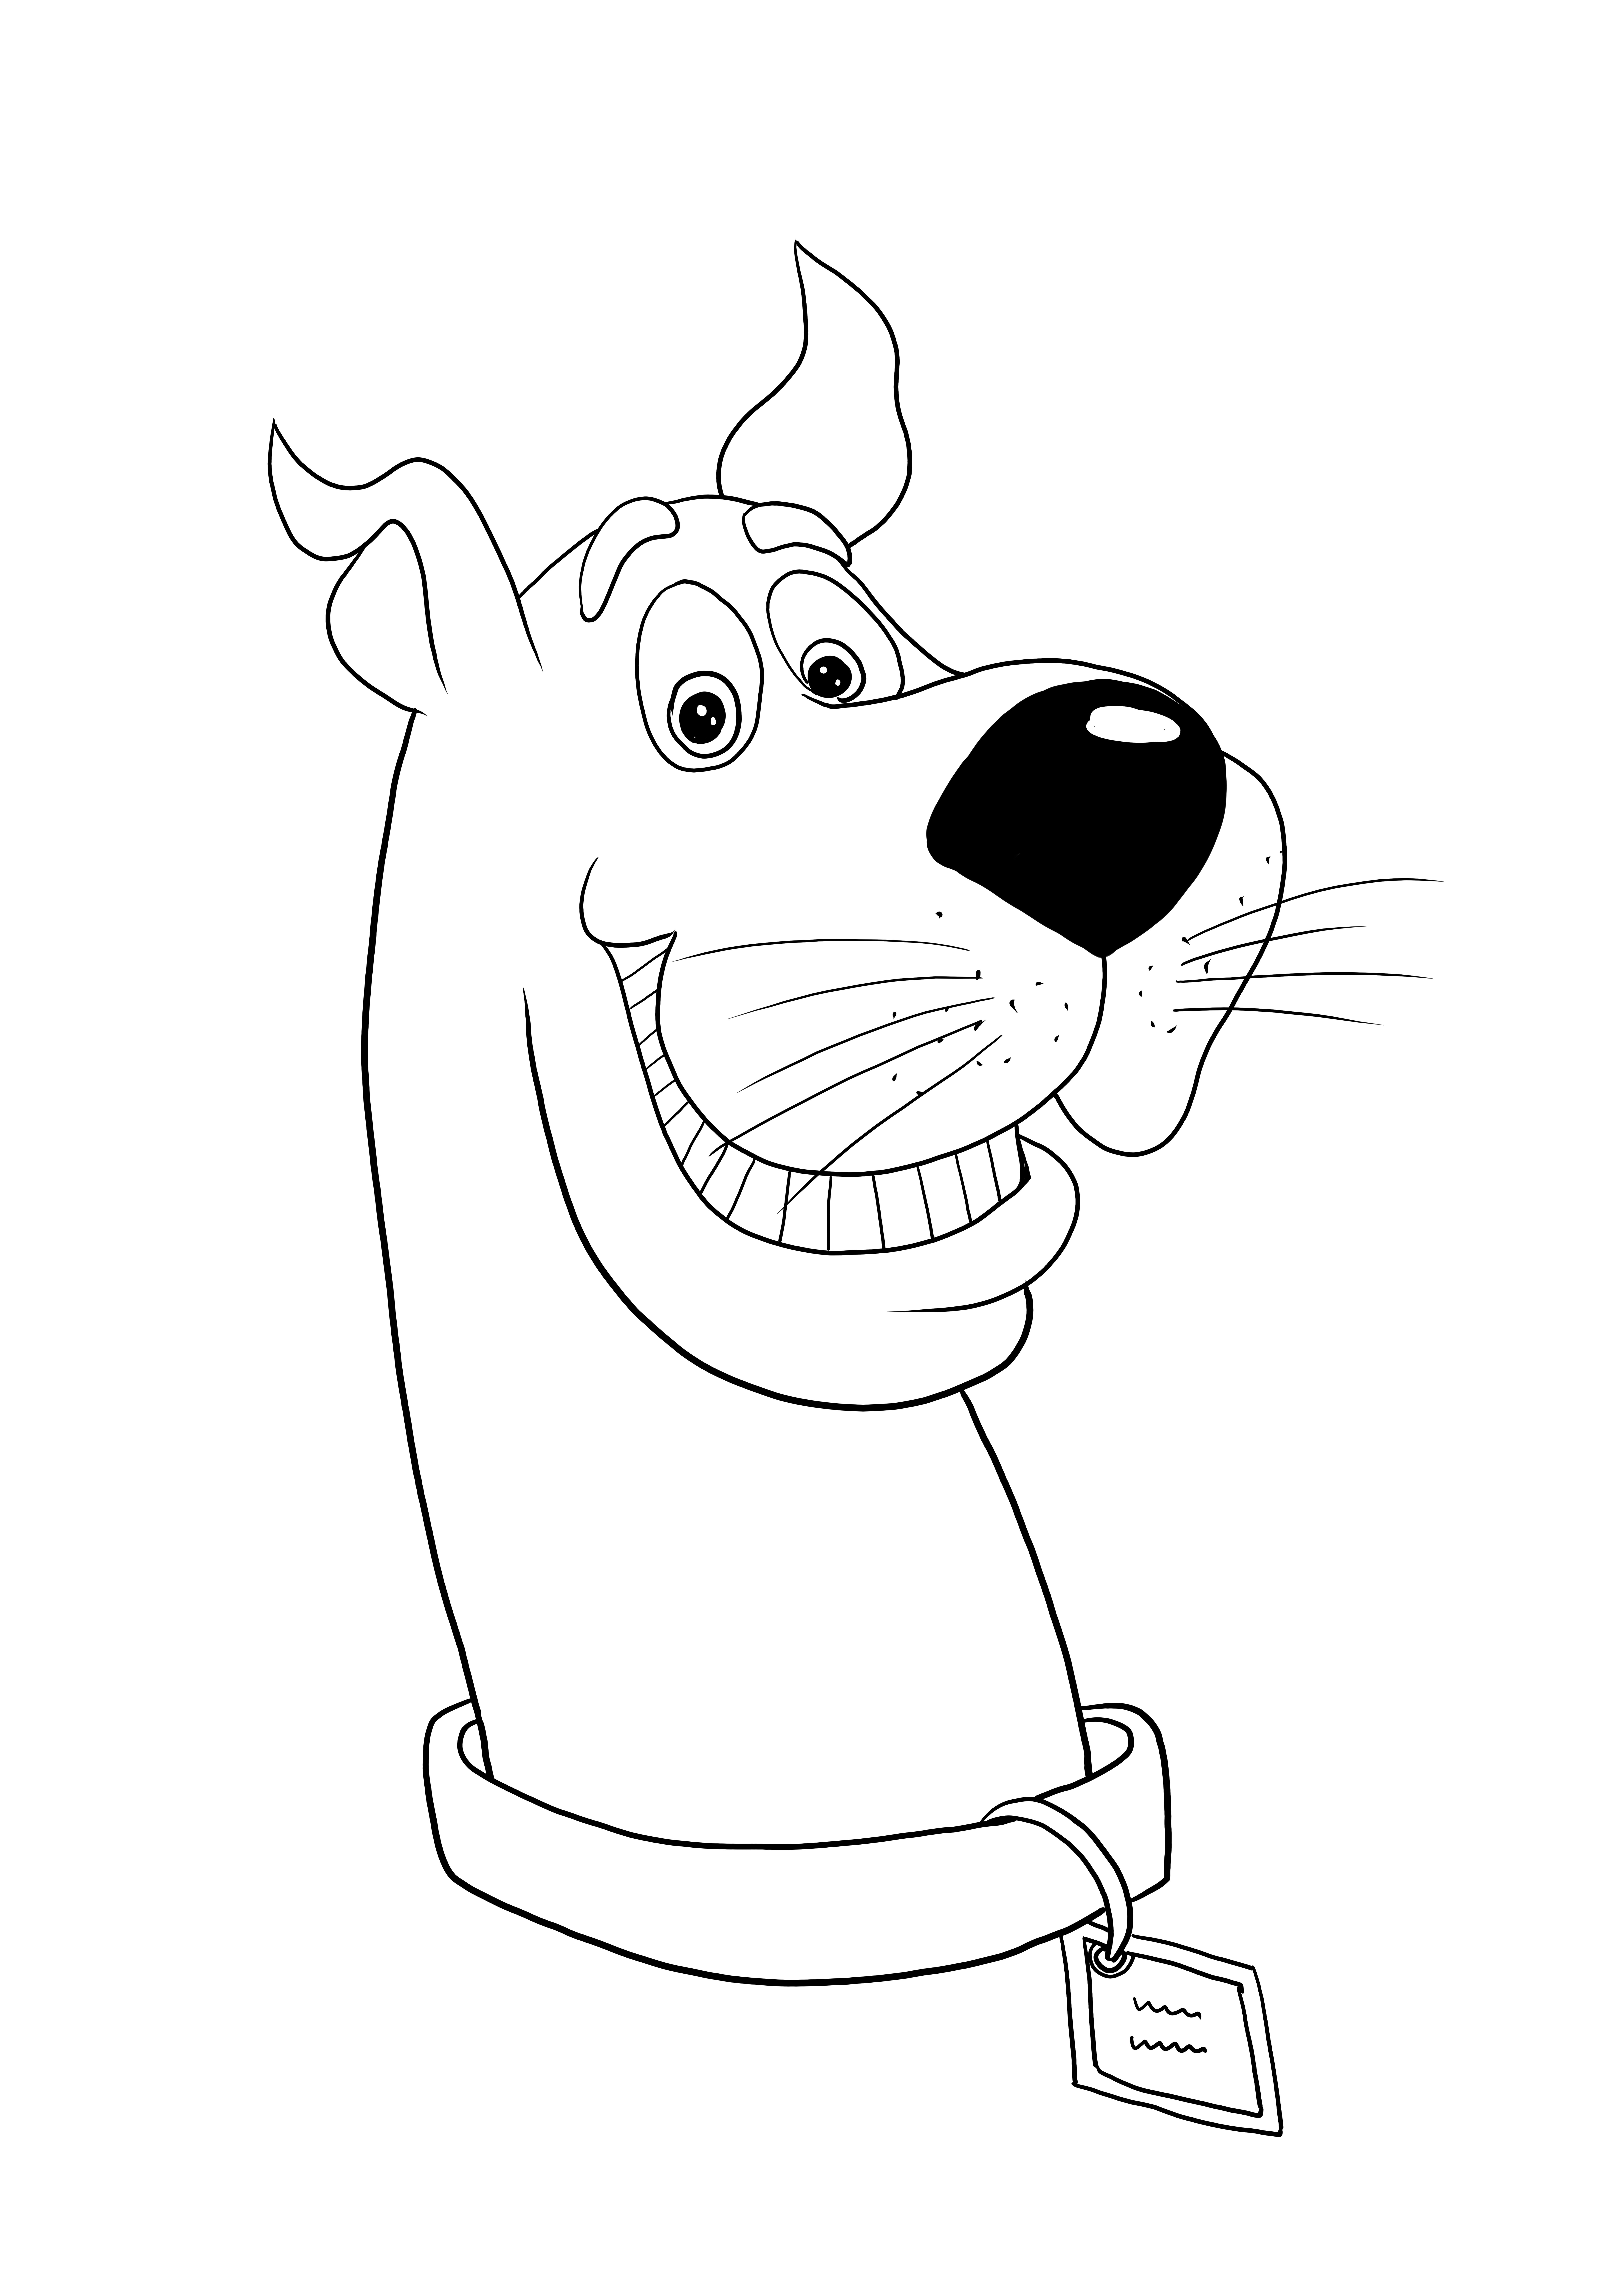 Dibujo de Scooby Doo con cara feliz para colorear, pintar e imprimir